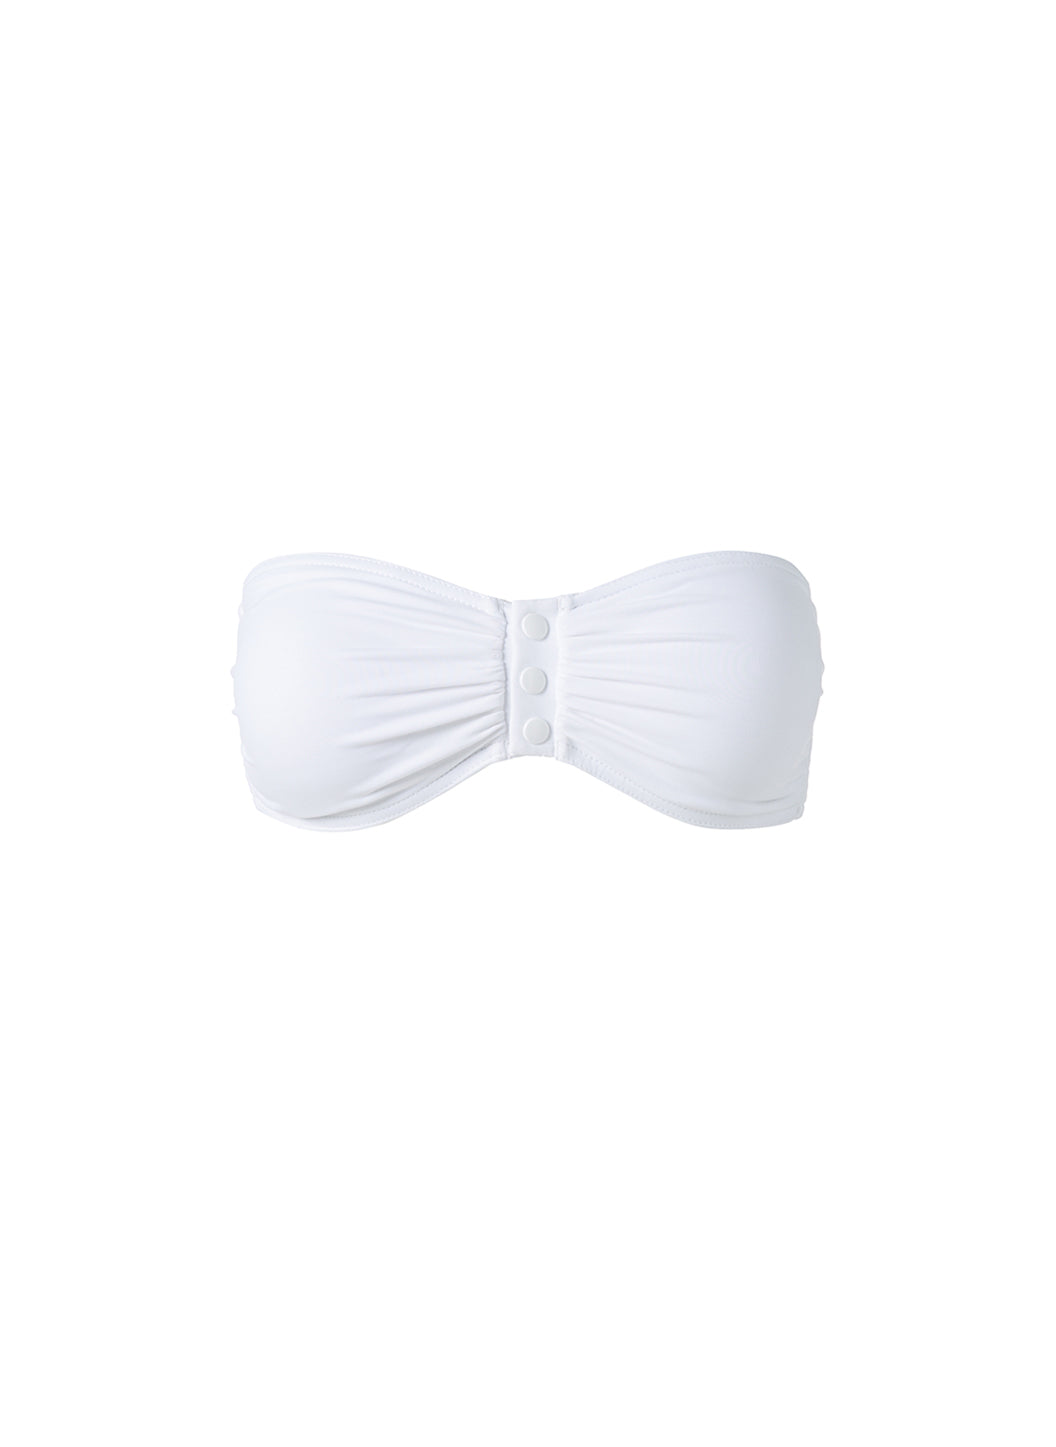 eze-white-bikini-top_cutout